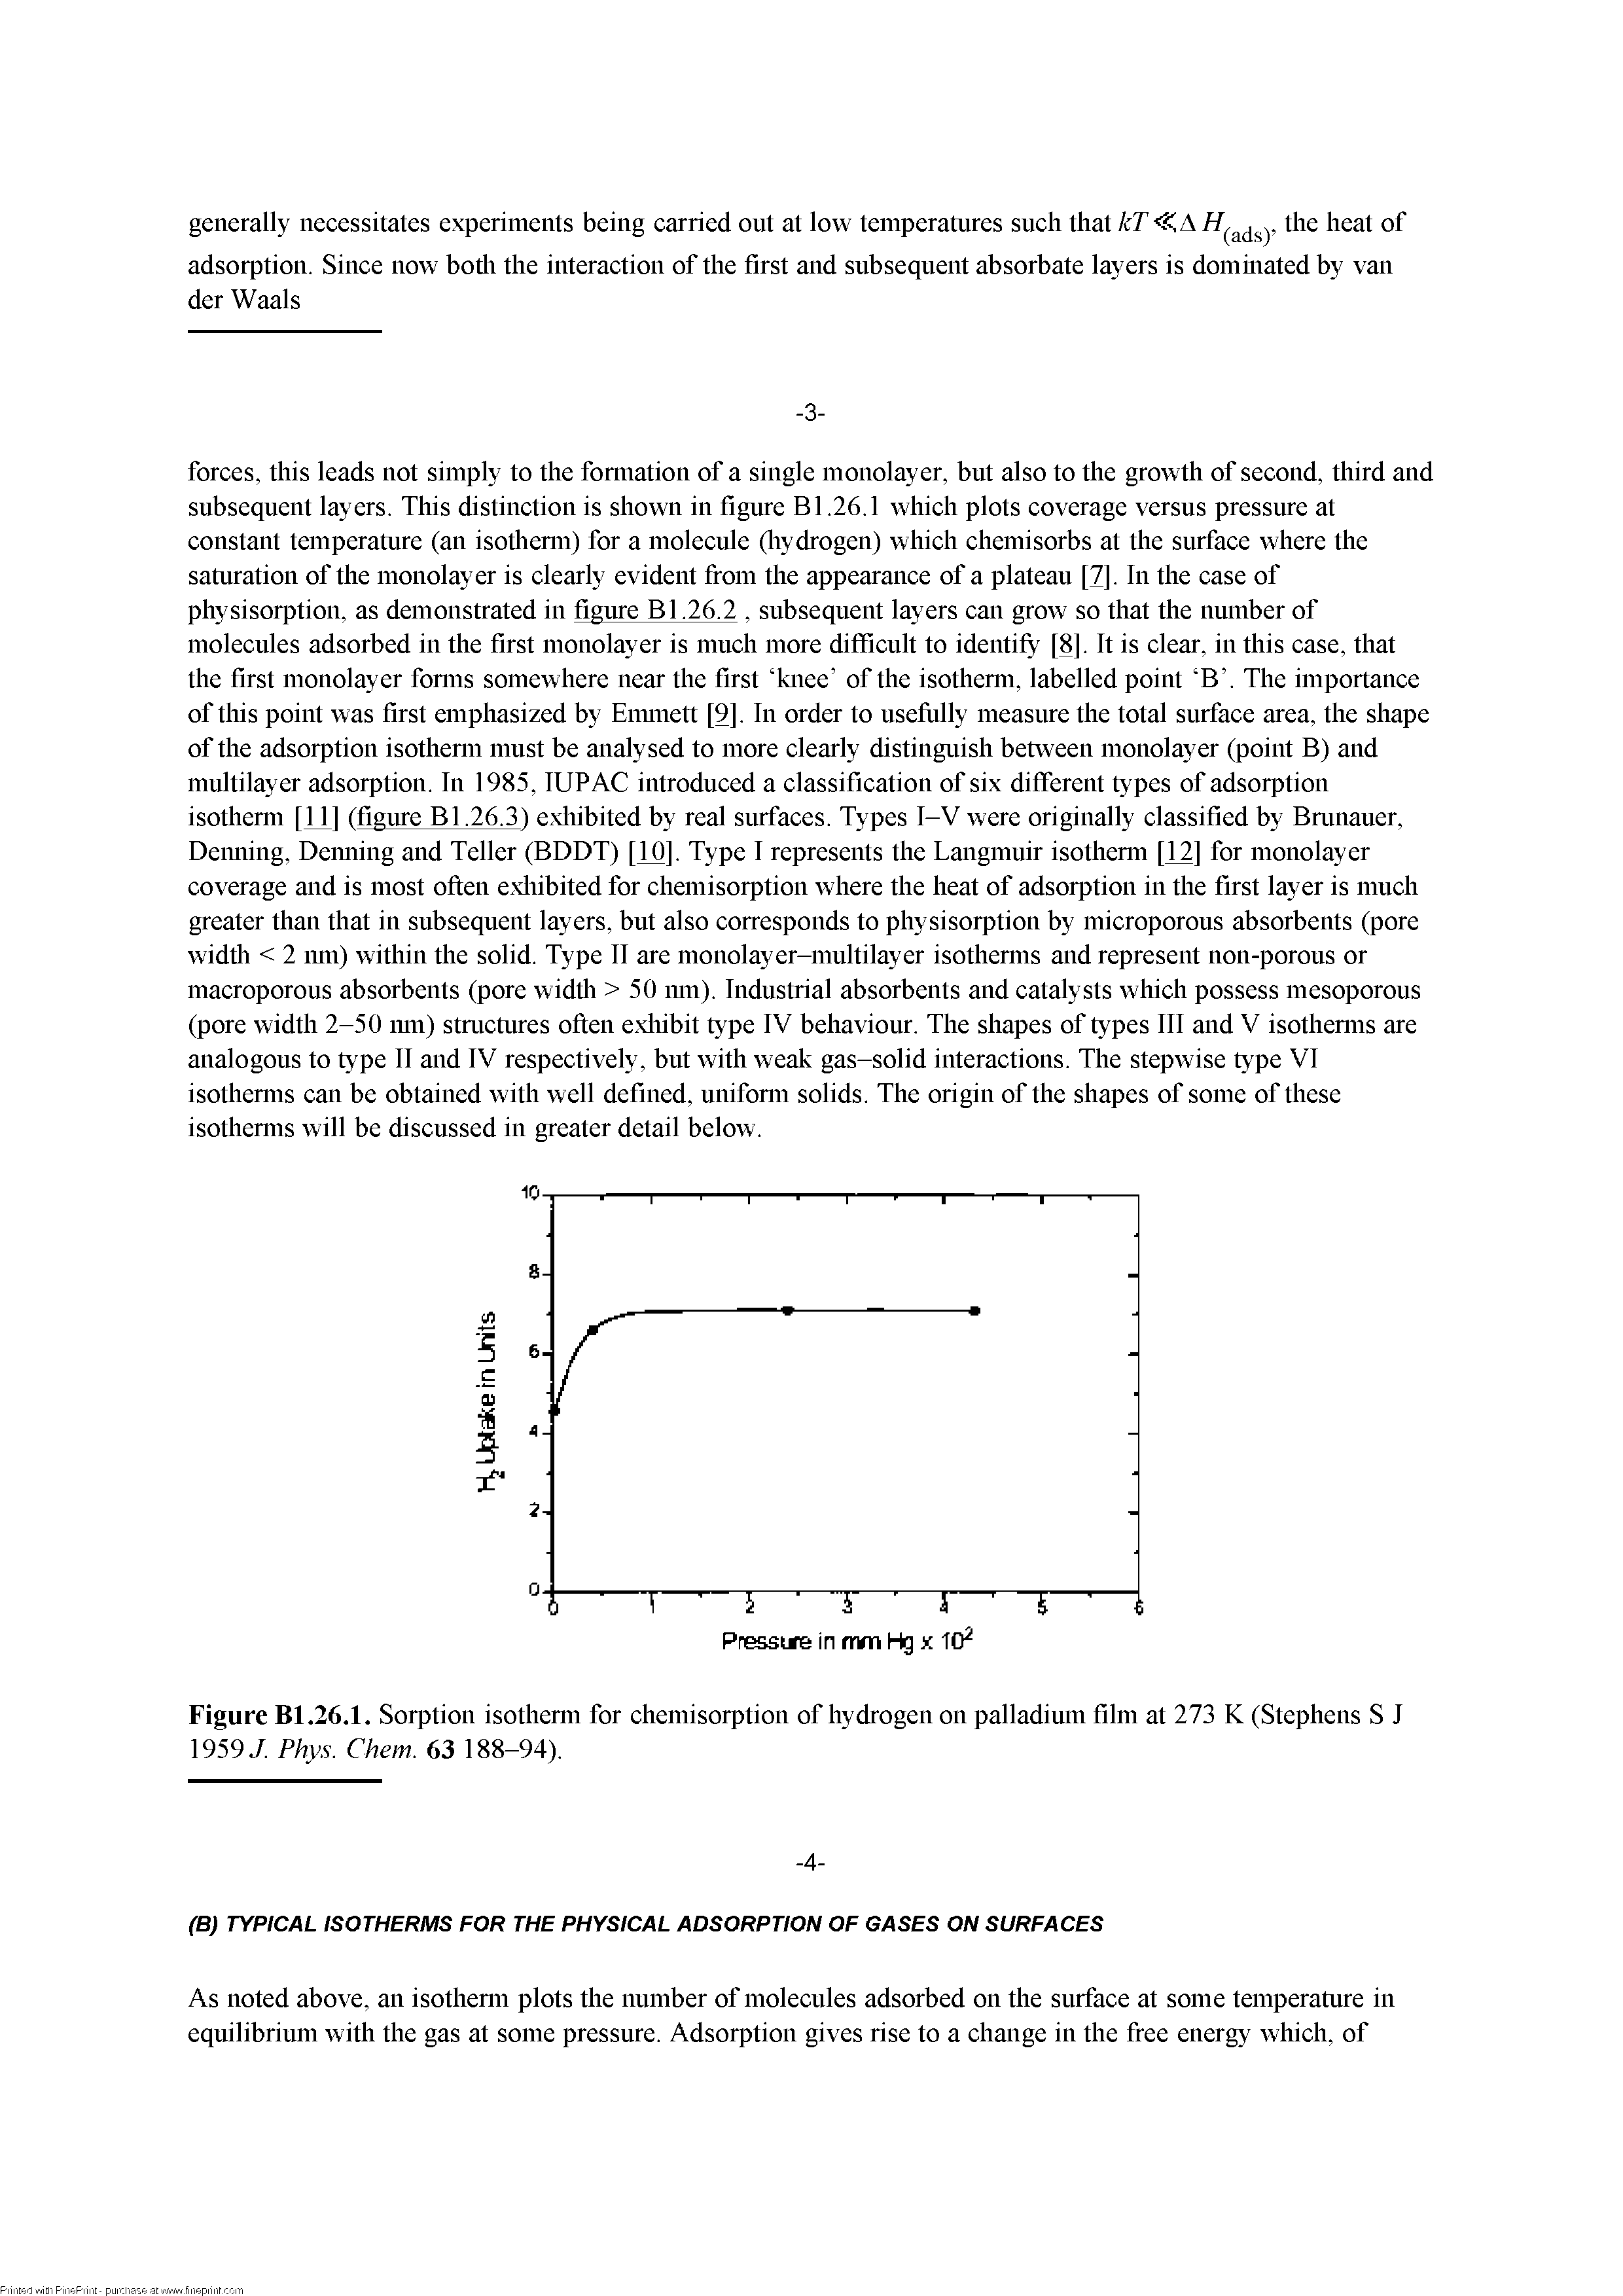 Figure Bl.26.1. Sorption isothemi for chemisorption of hydrogen on palladium film at 273 K (Stephens S J 19597. Phys. Chem.. 63 188-94).